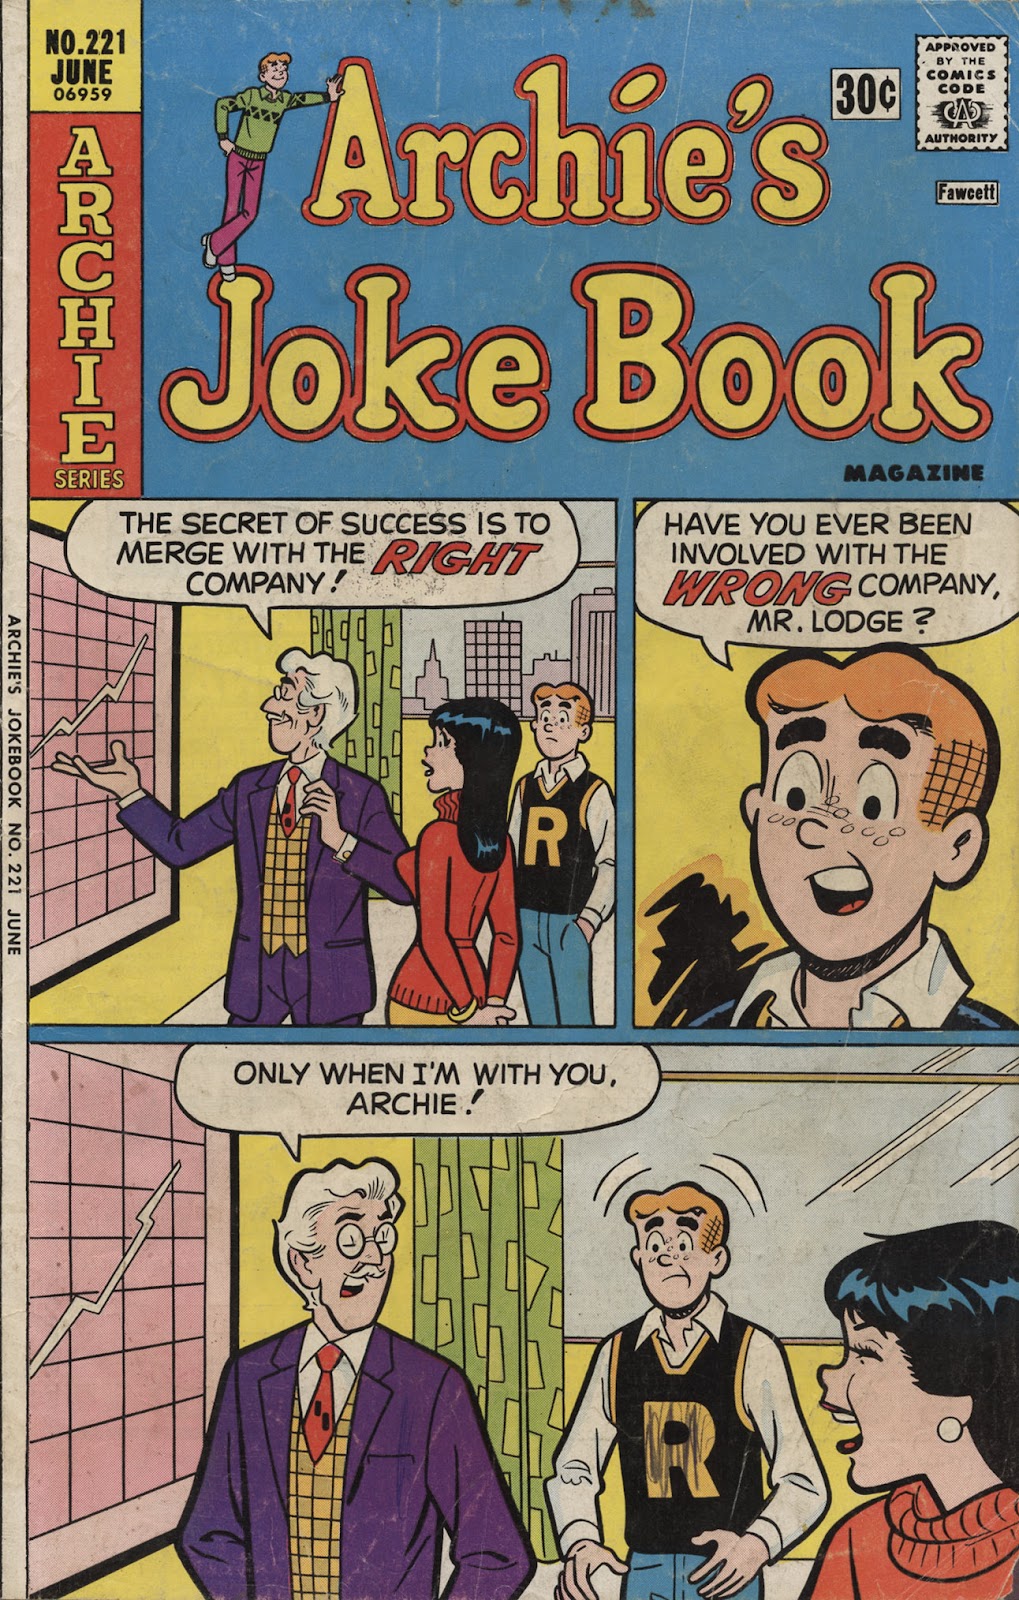 Archie's Joke Book Magazine issue 221 - Page 1